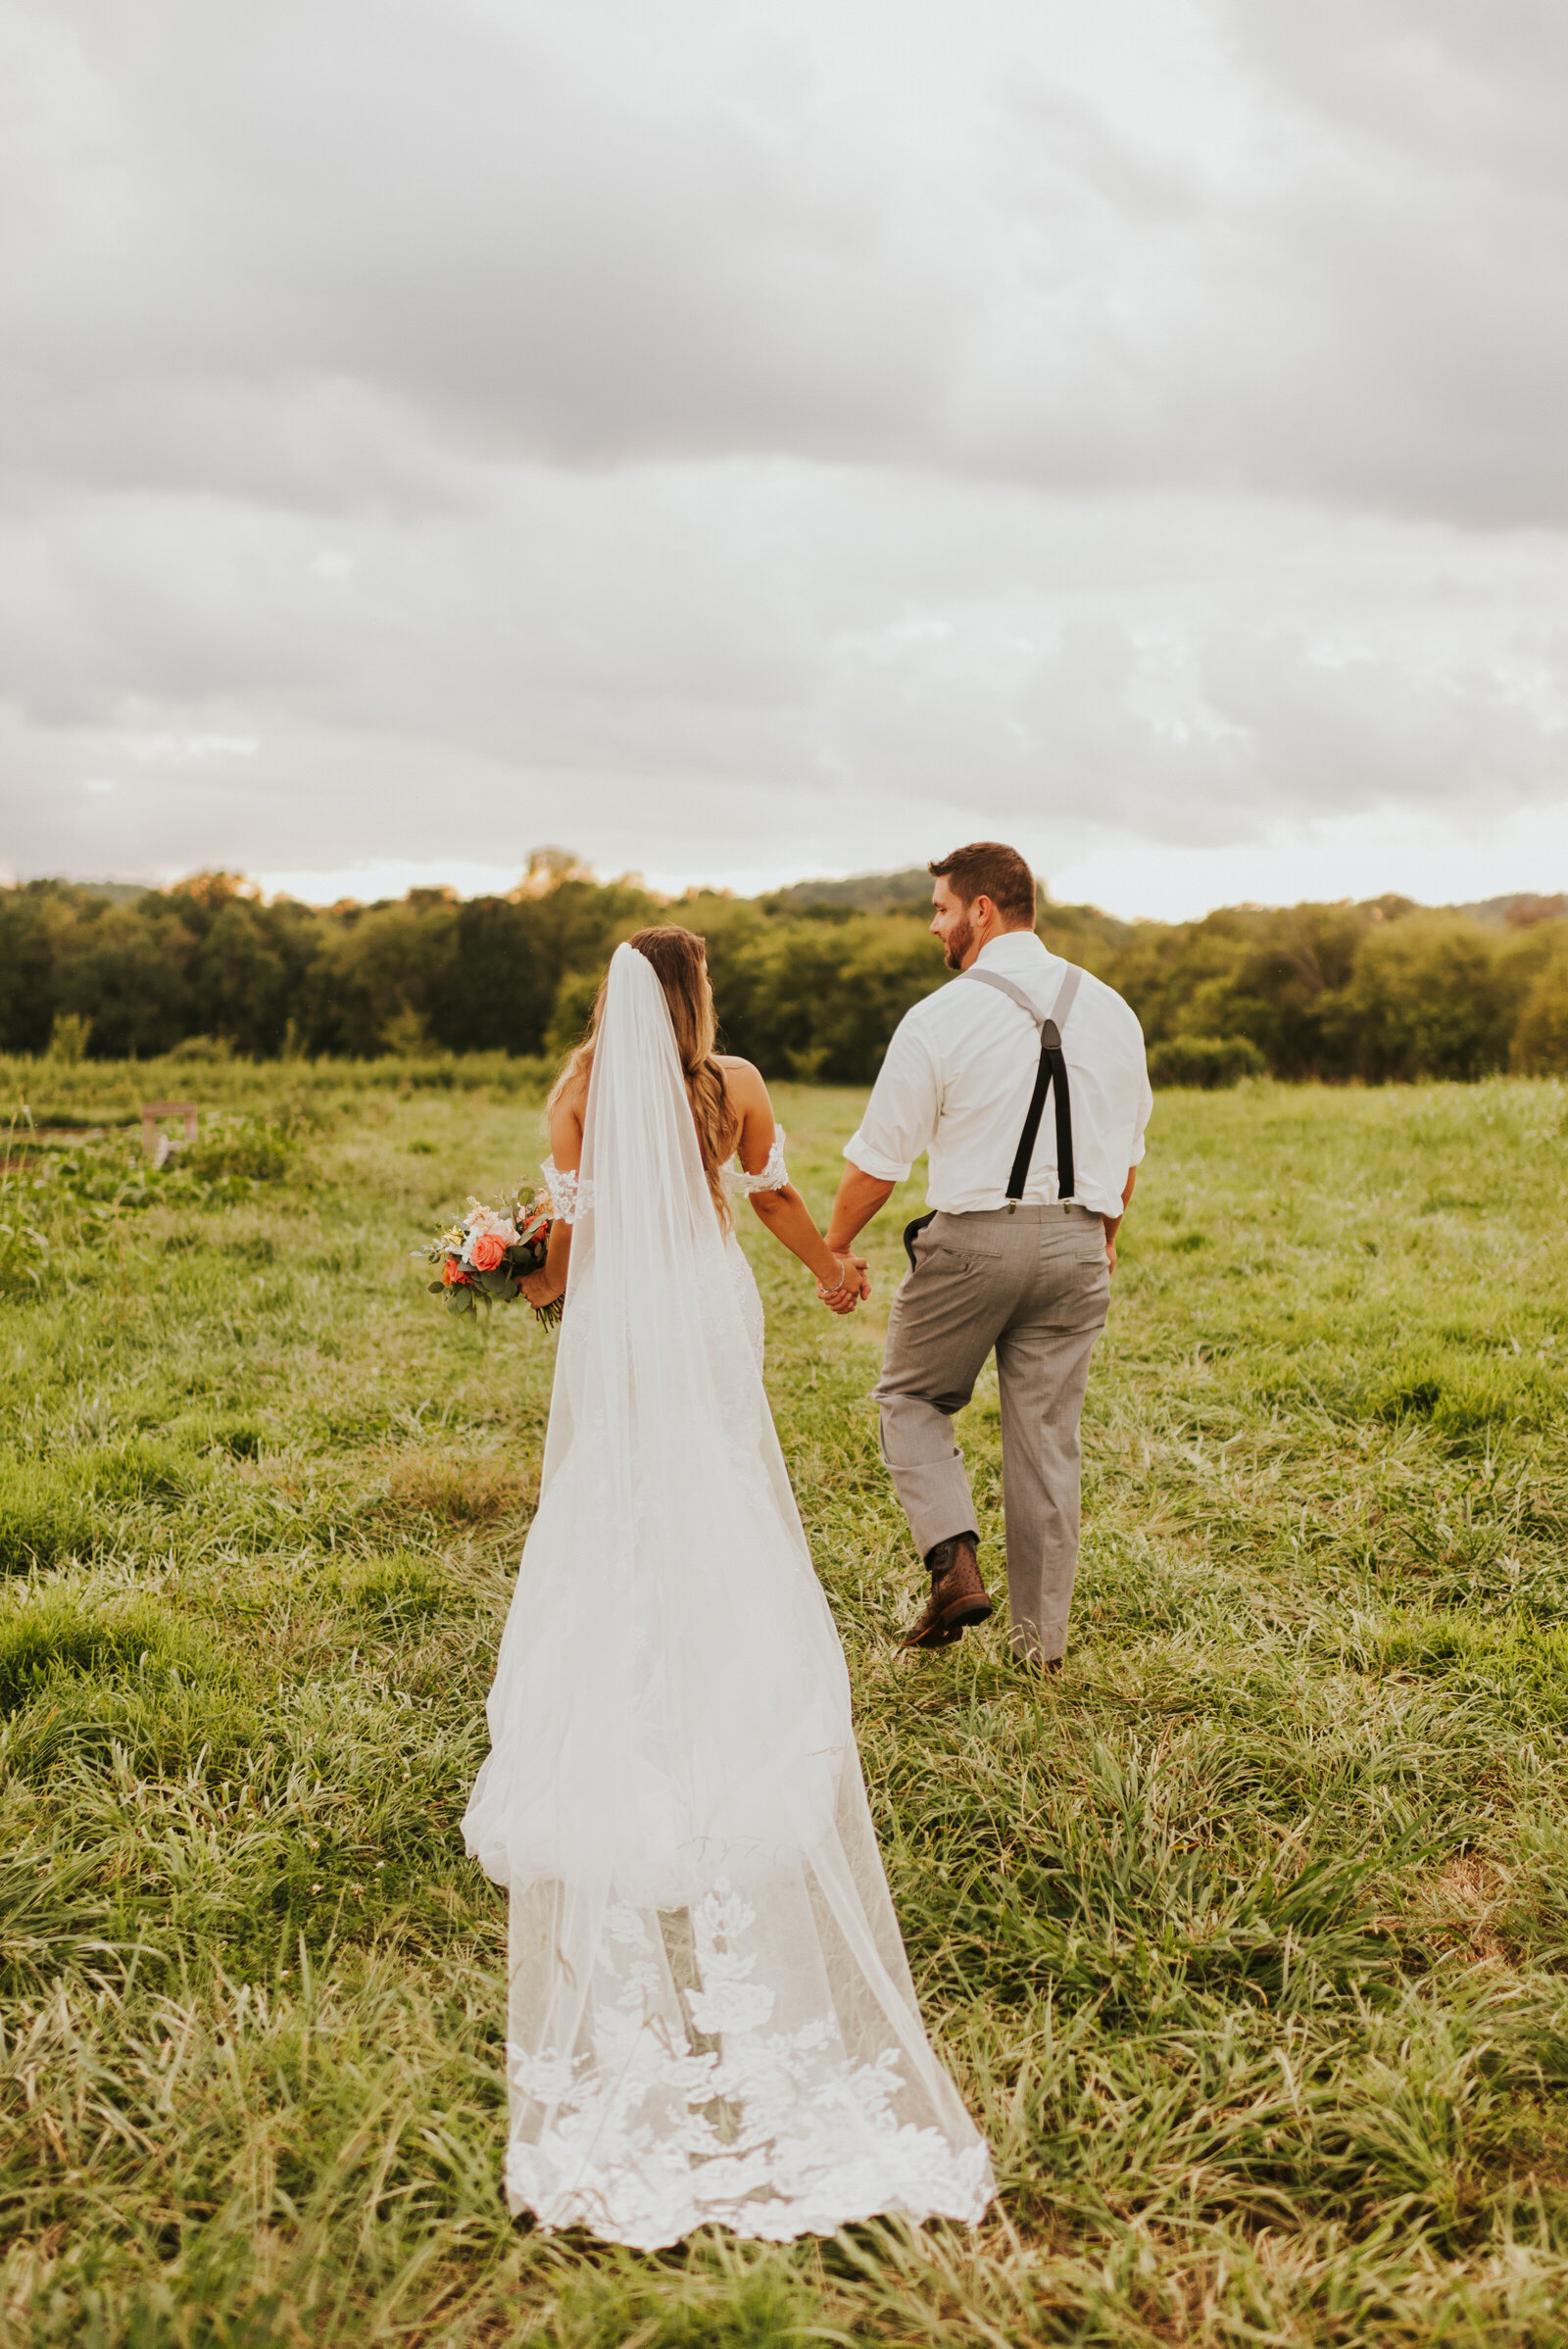 Nashville Wedding Photography - AllenBrooke Farms